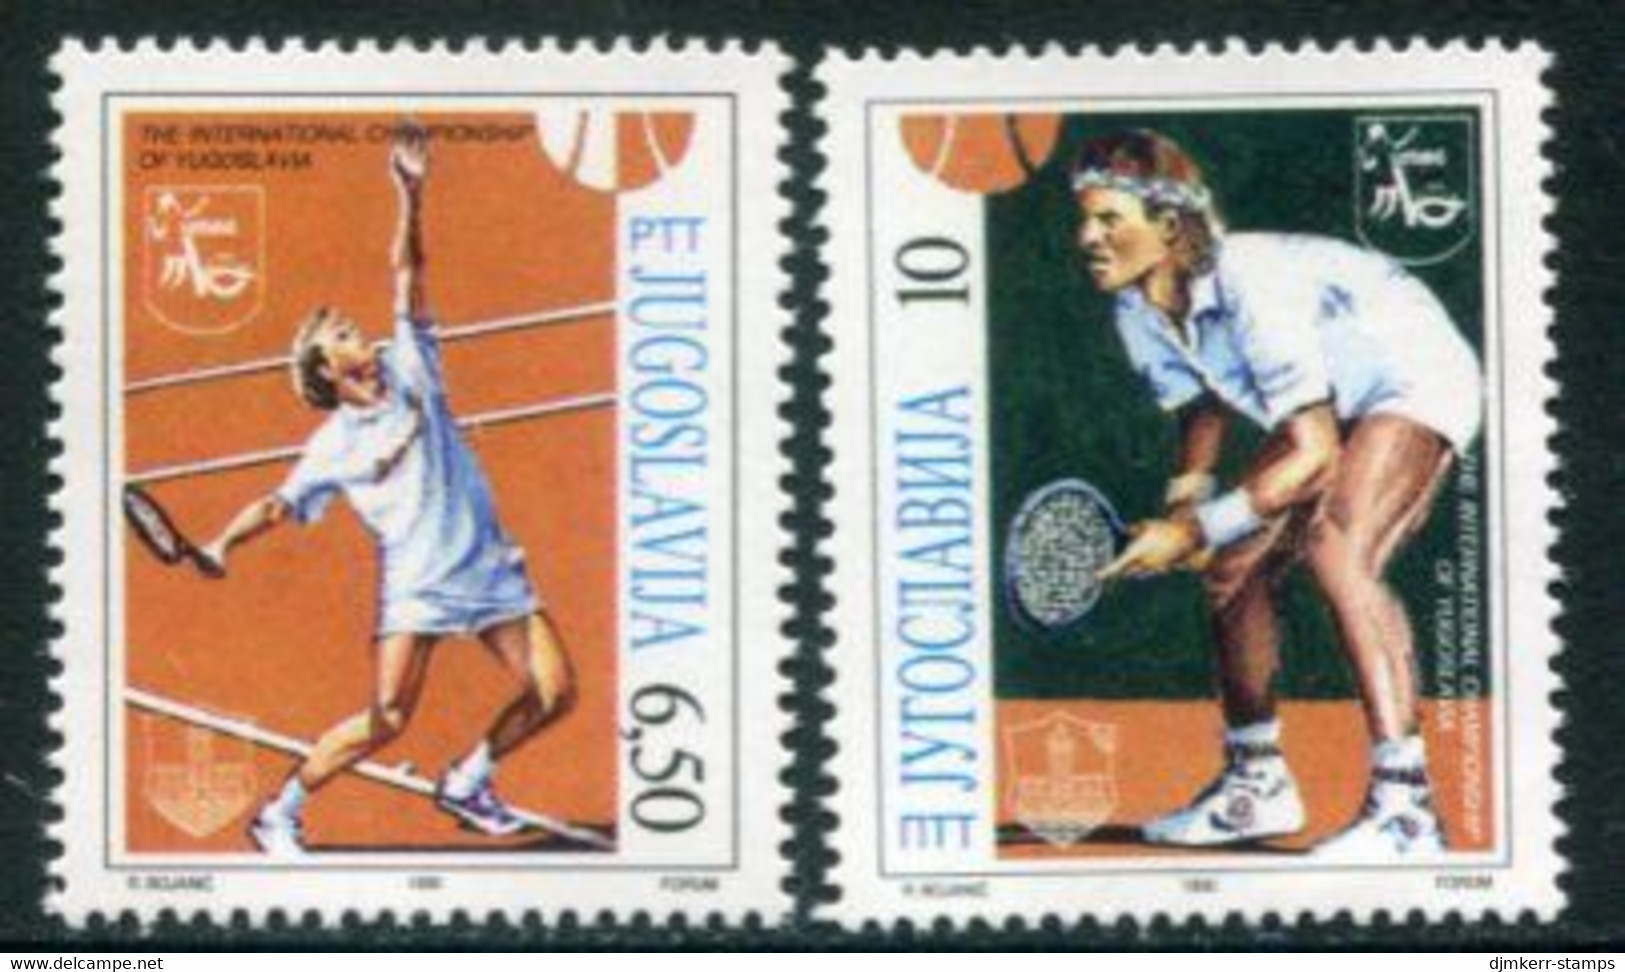 YUGOSLAVIA 1990 UMAG '90 Tennis Tournament  MNH / **.  Michel 2419-20 - Neufs